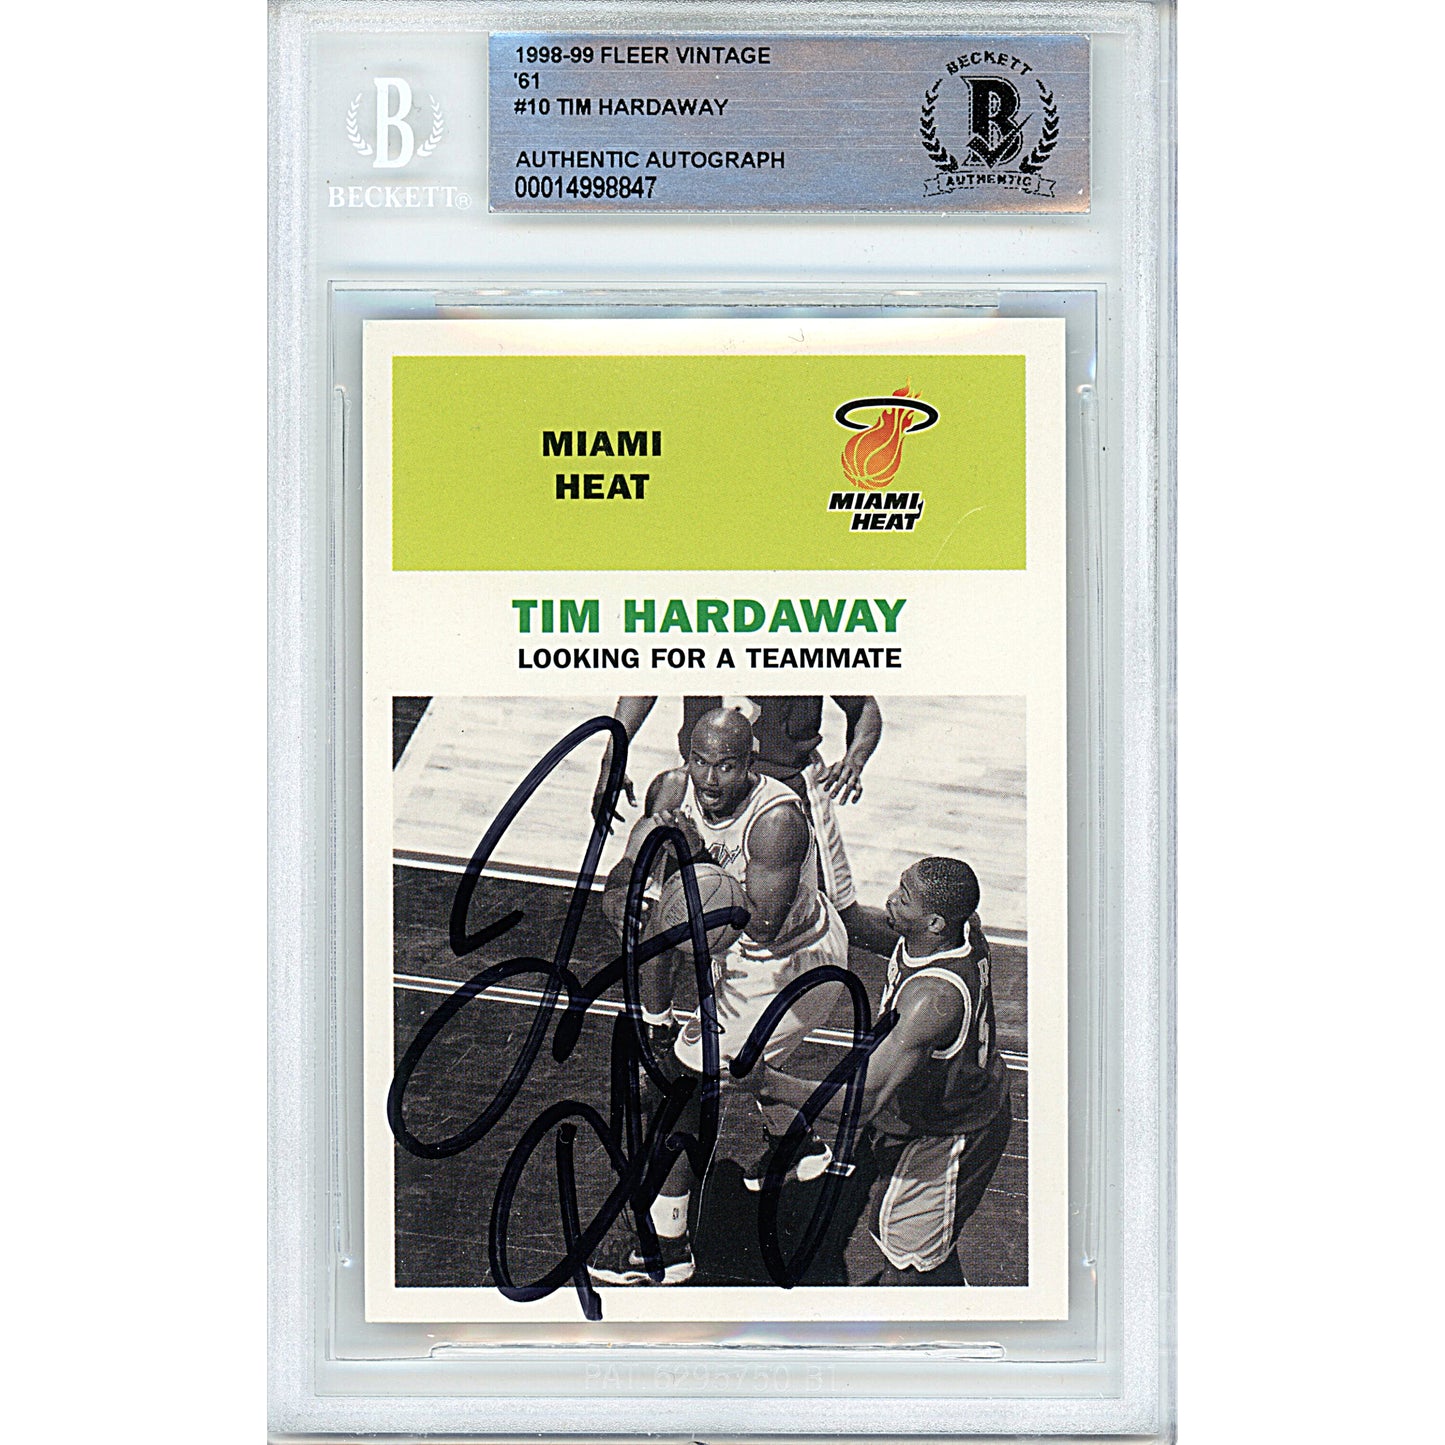 Basketballs- Autographed- Tim Hardaway Signed Miami Heat 1998-1999 Fleer Vintage '61 Basketball Card Beckett Authentication Slabbed 00014998847 - 101